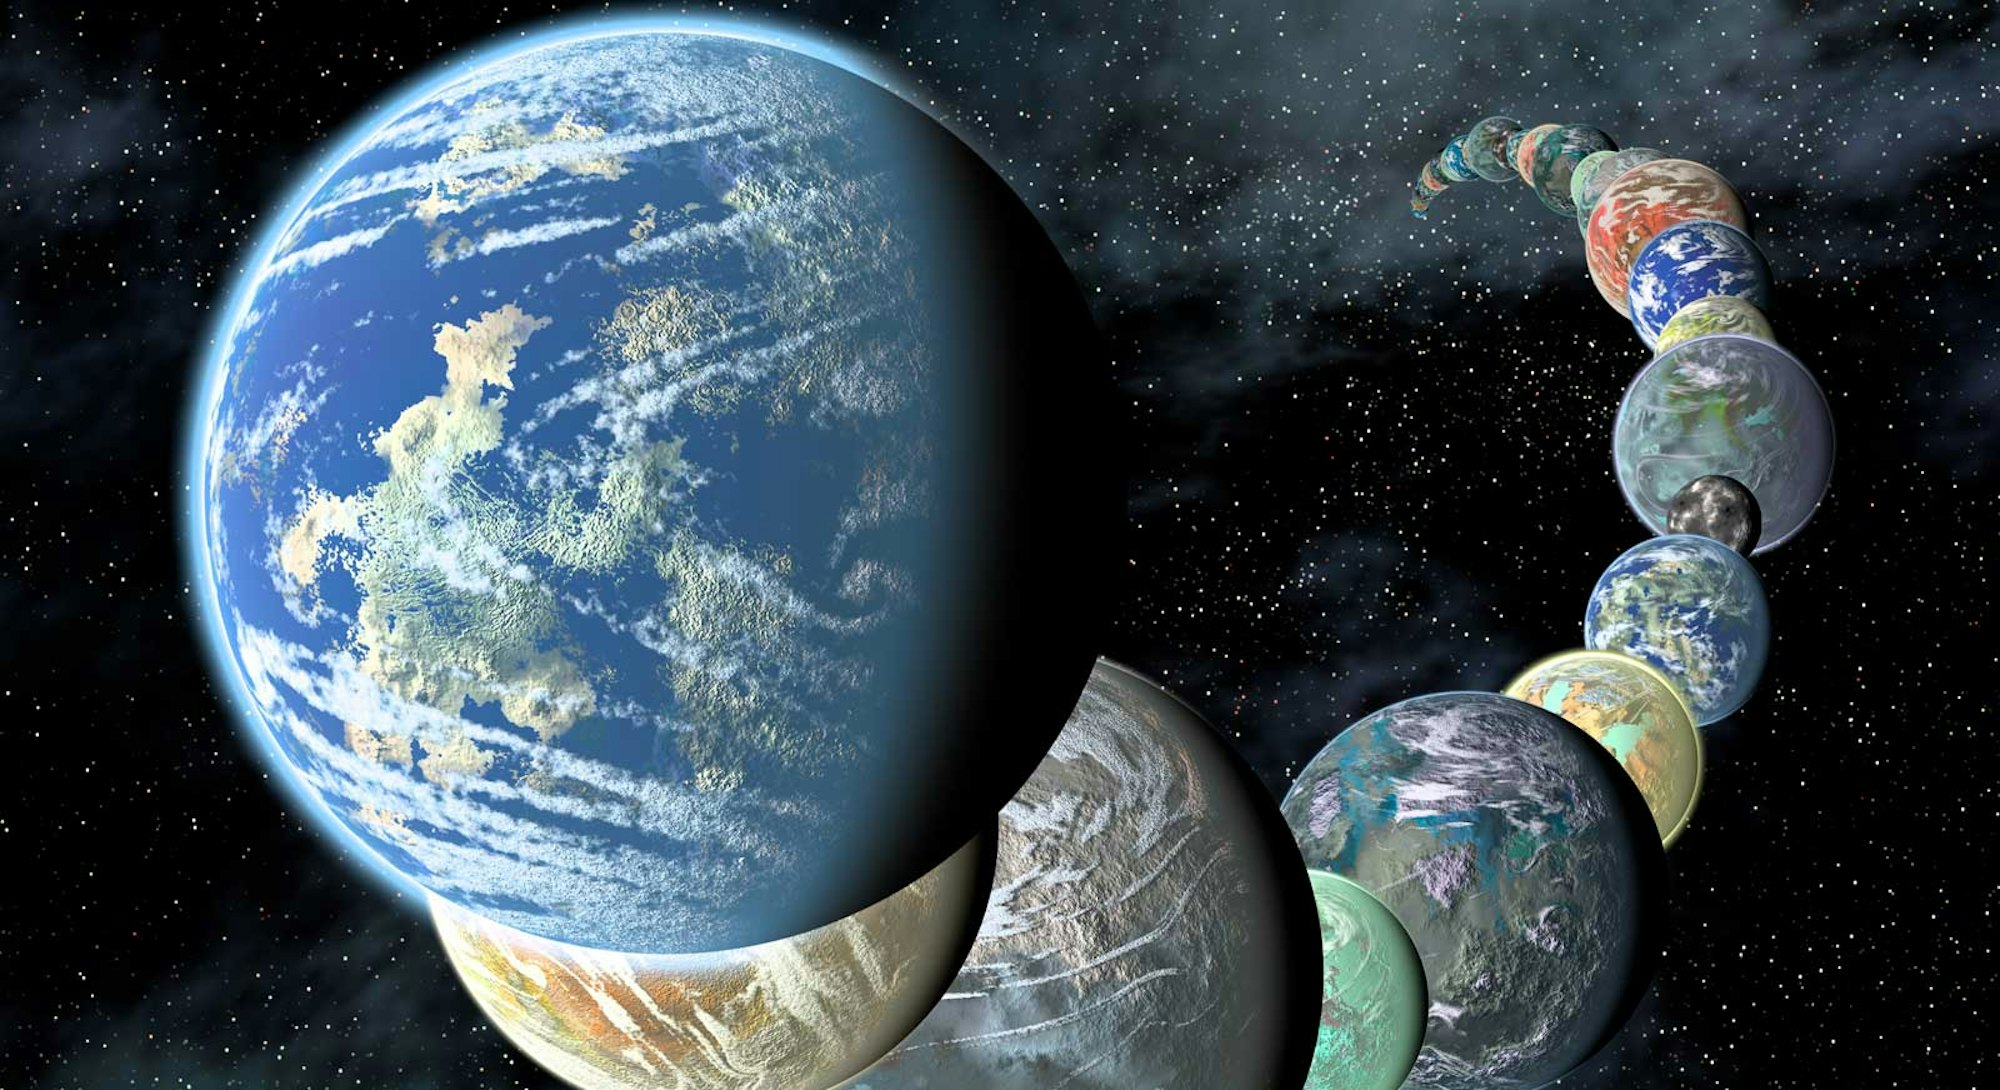 Illustration of exoplanets -- rendering